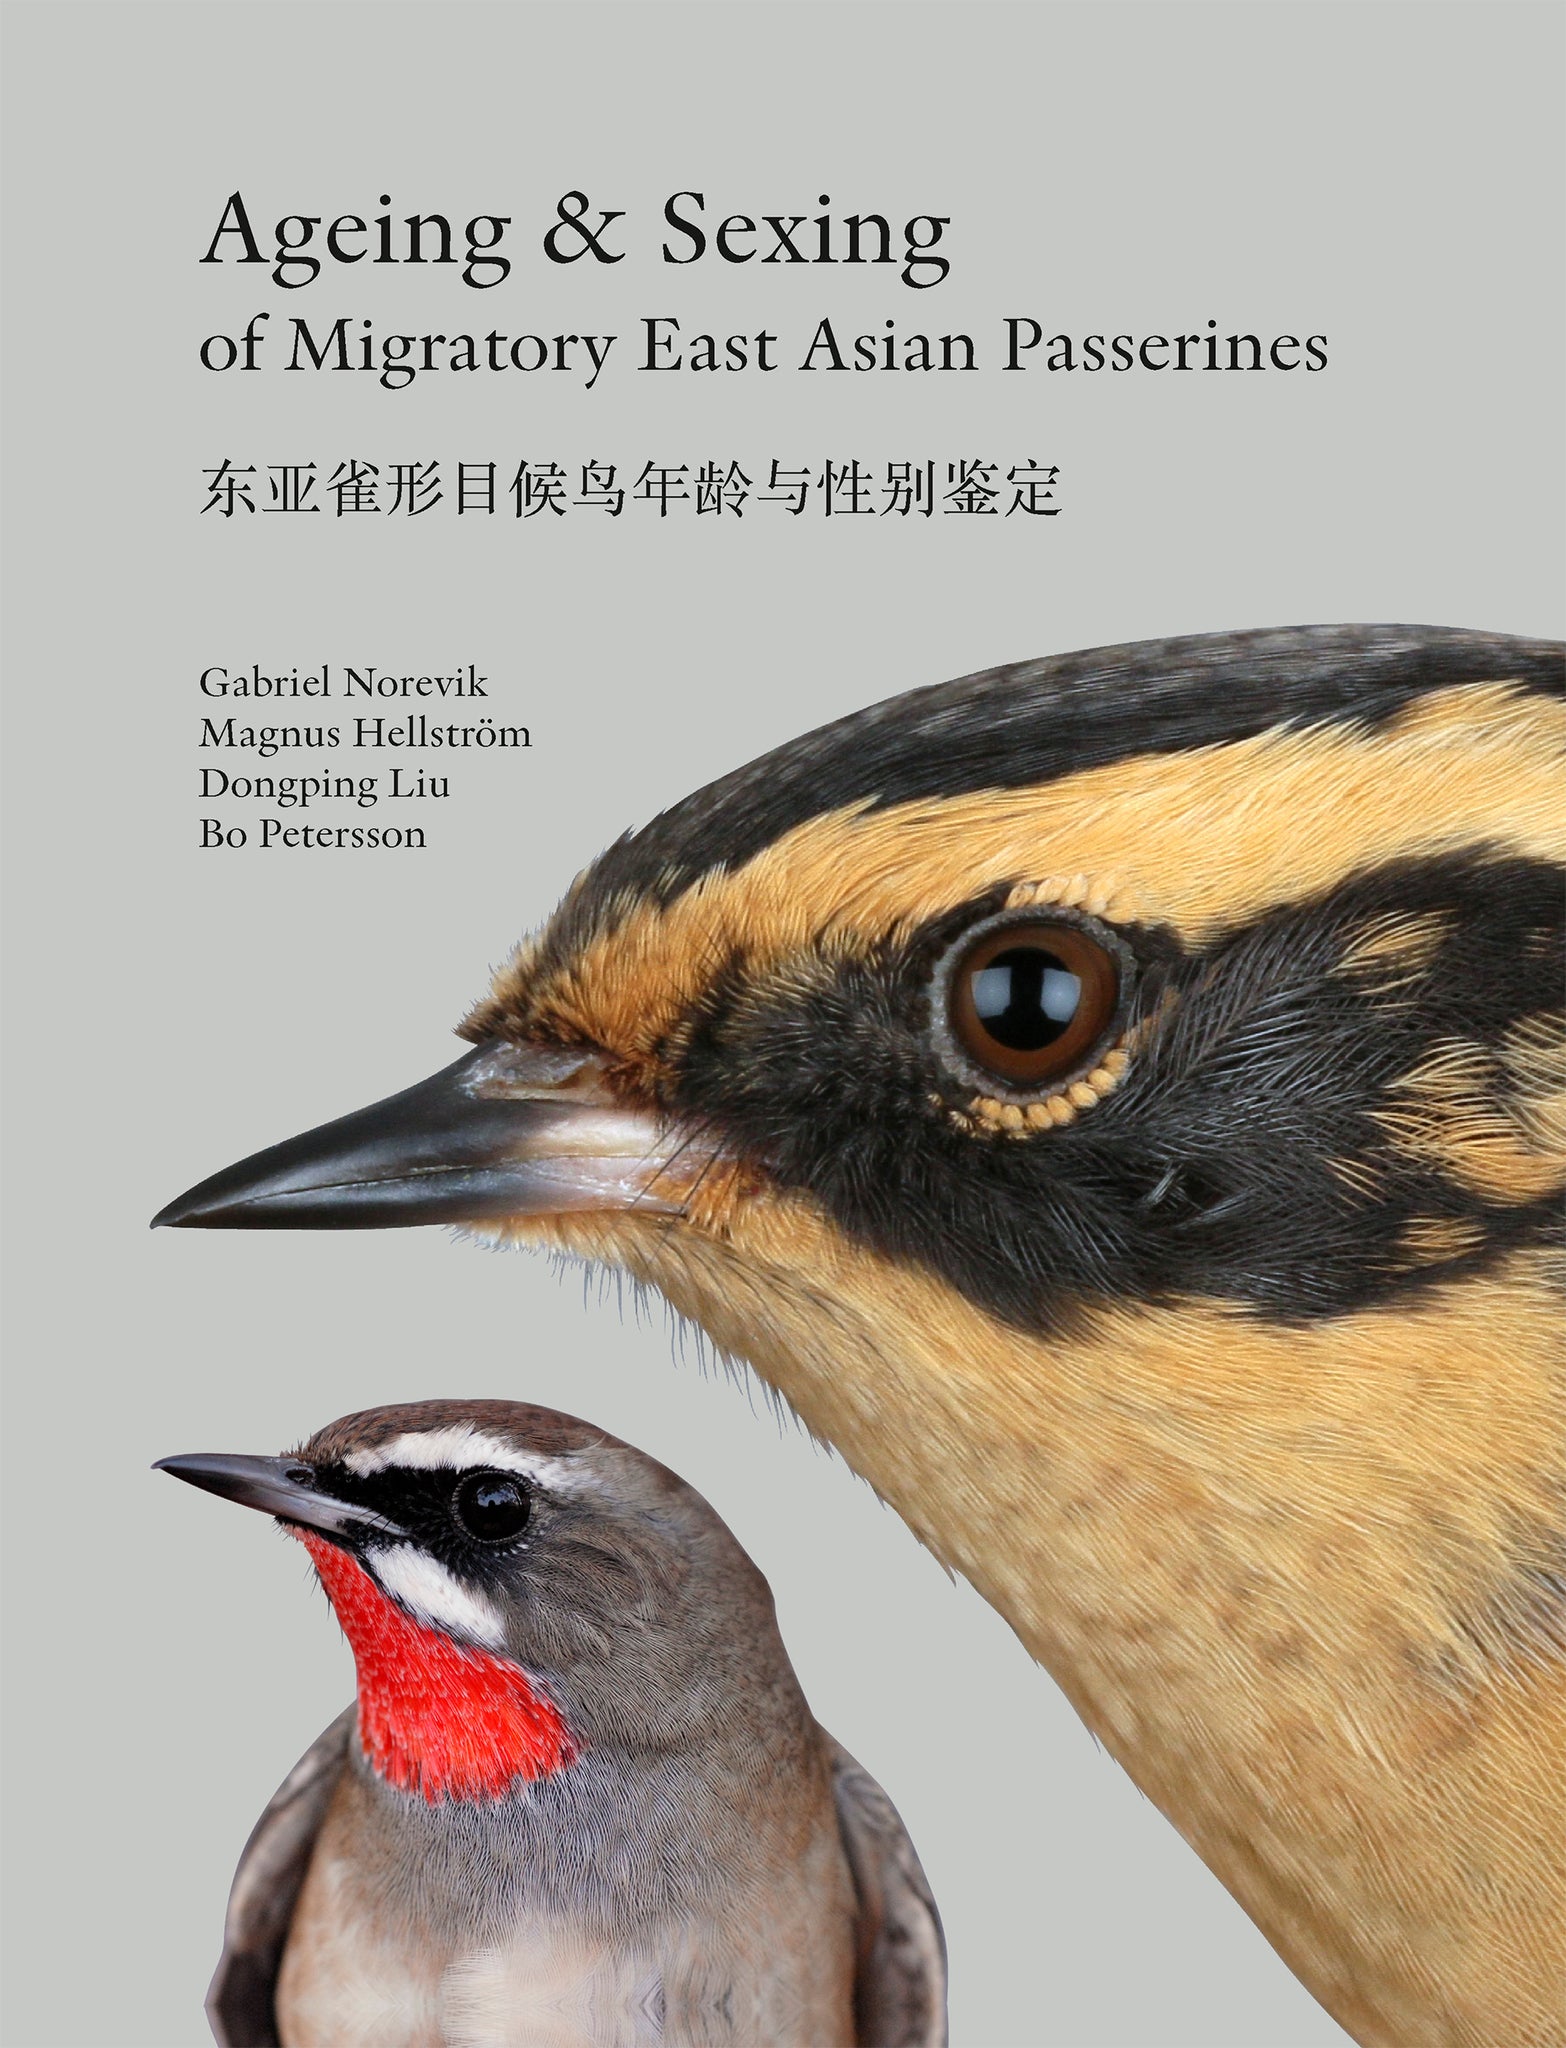 Ageing & Sexing of migratory East Asian passerines (Norevik, Hellström, Liu, Petersson, 2020)